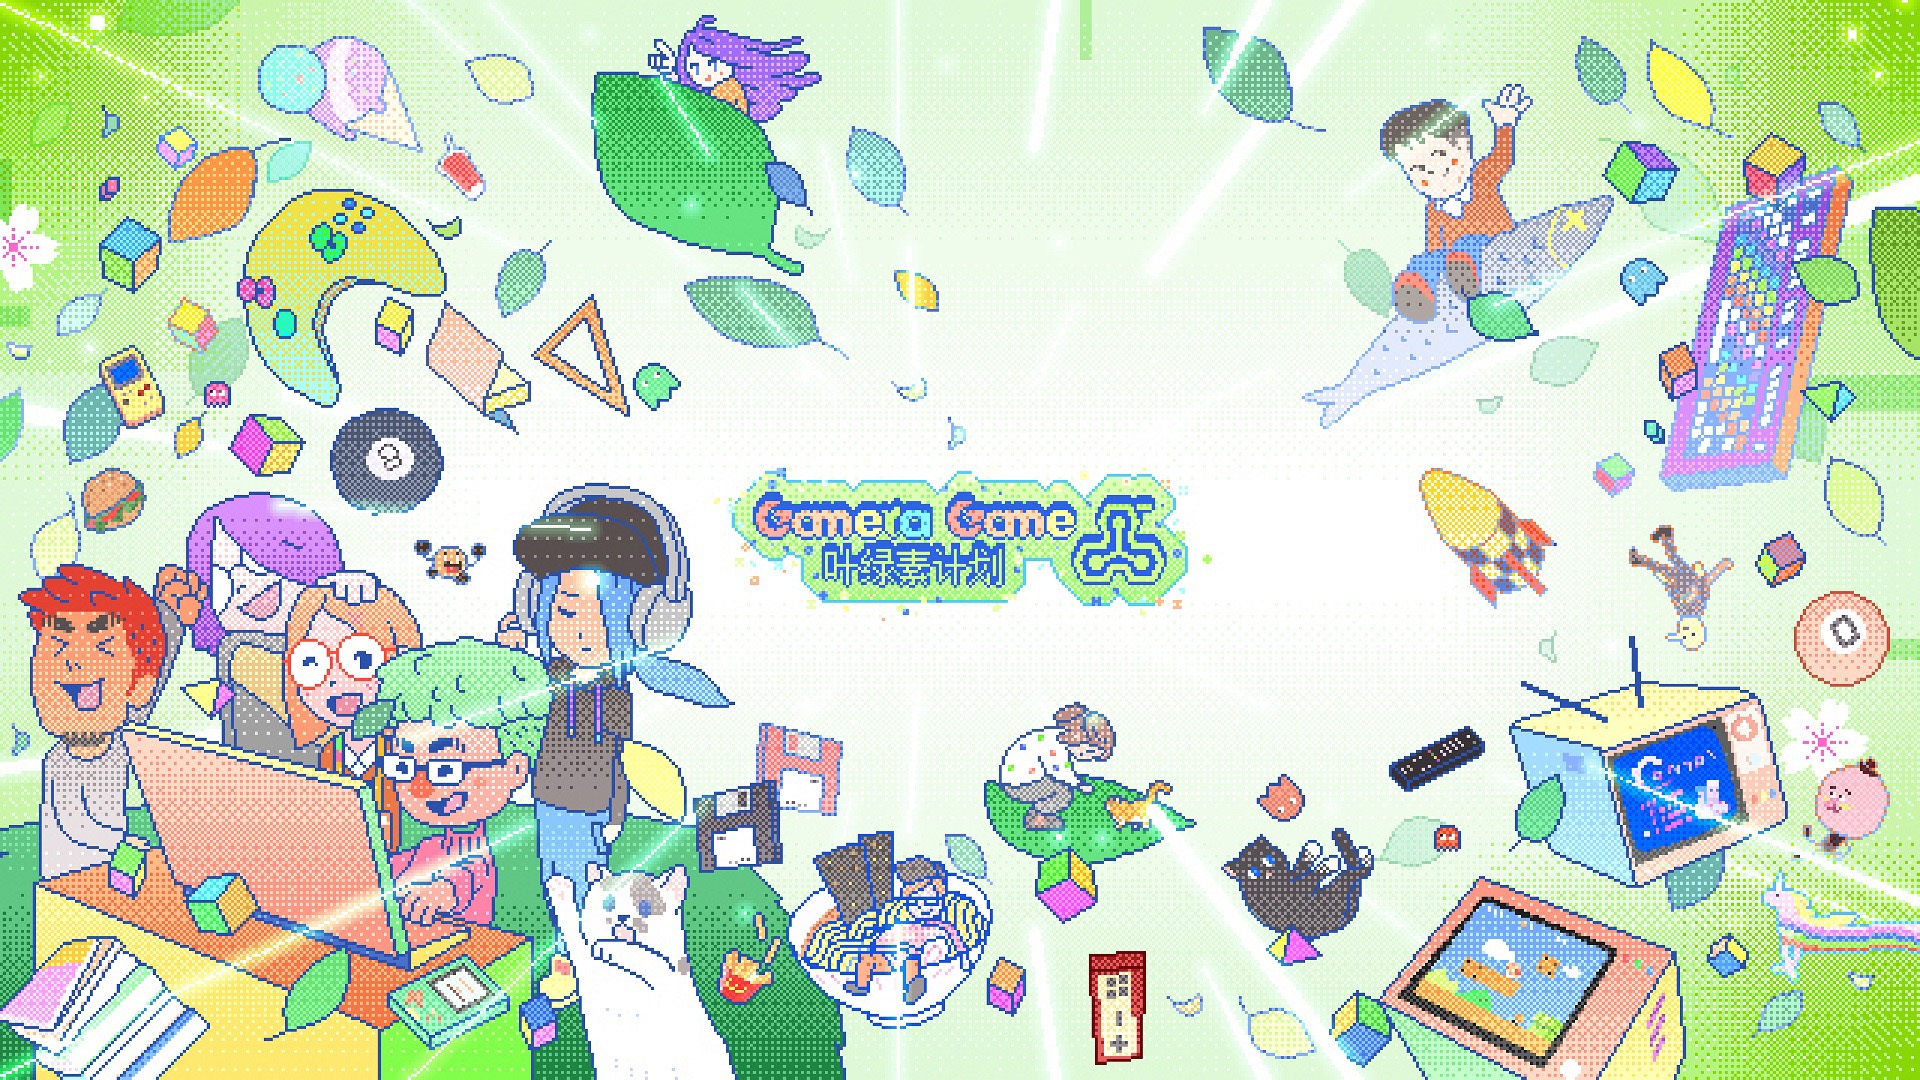 Gamera Game启动“叶绿素企图” 旨正在扶持国产独立游戏团队